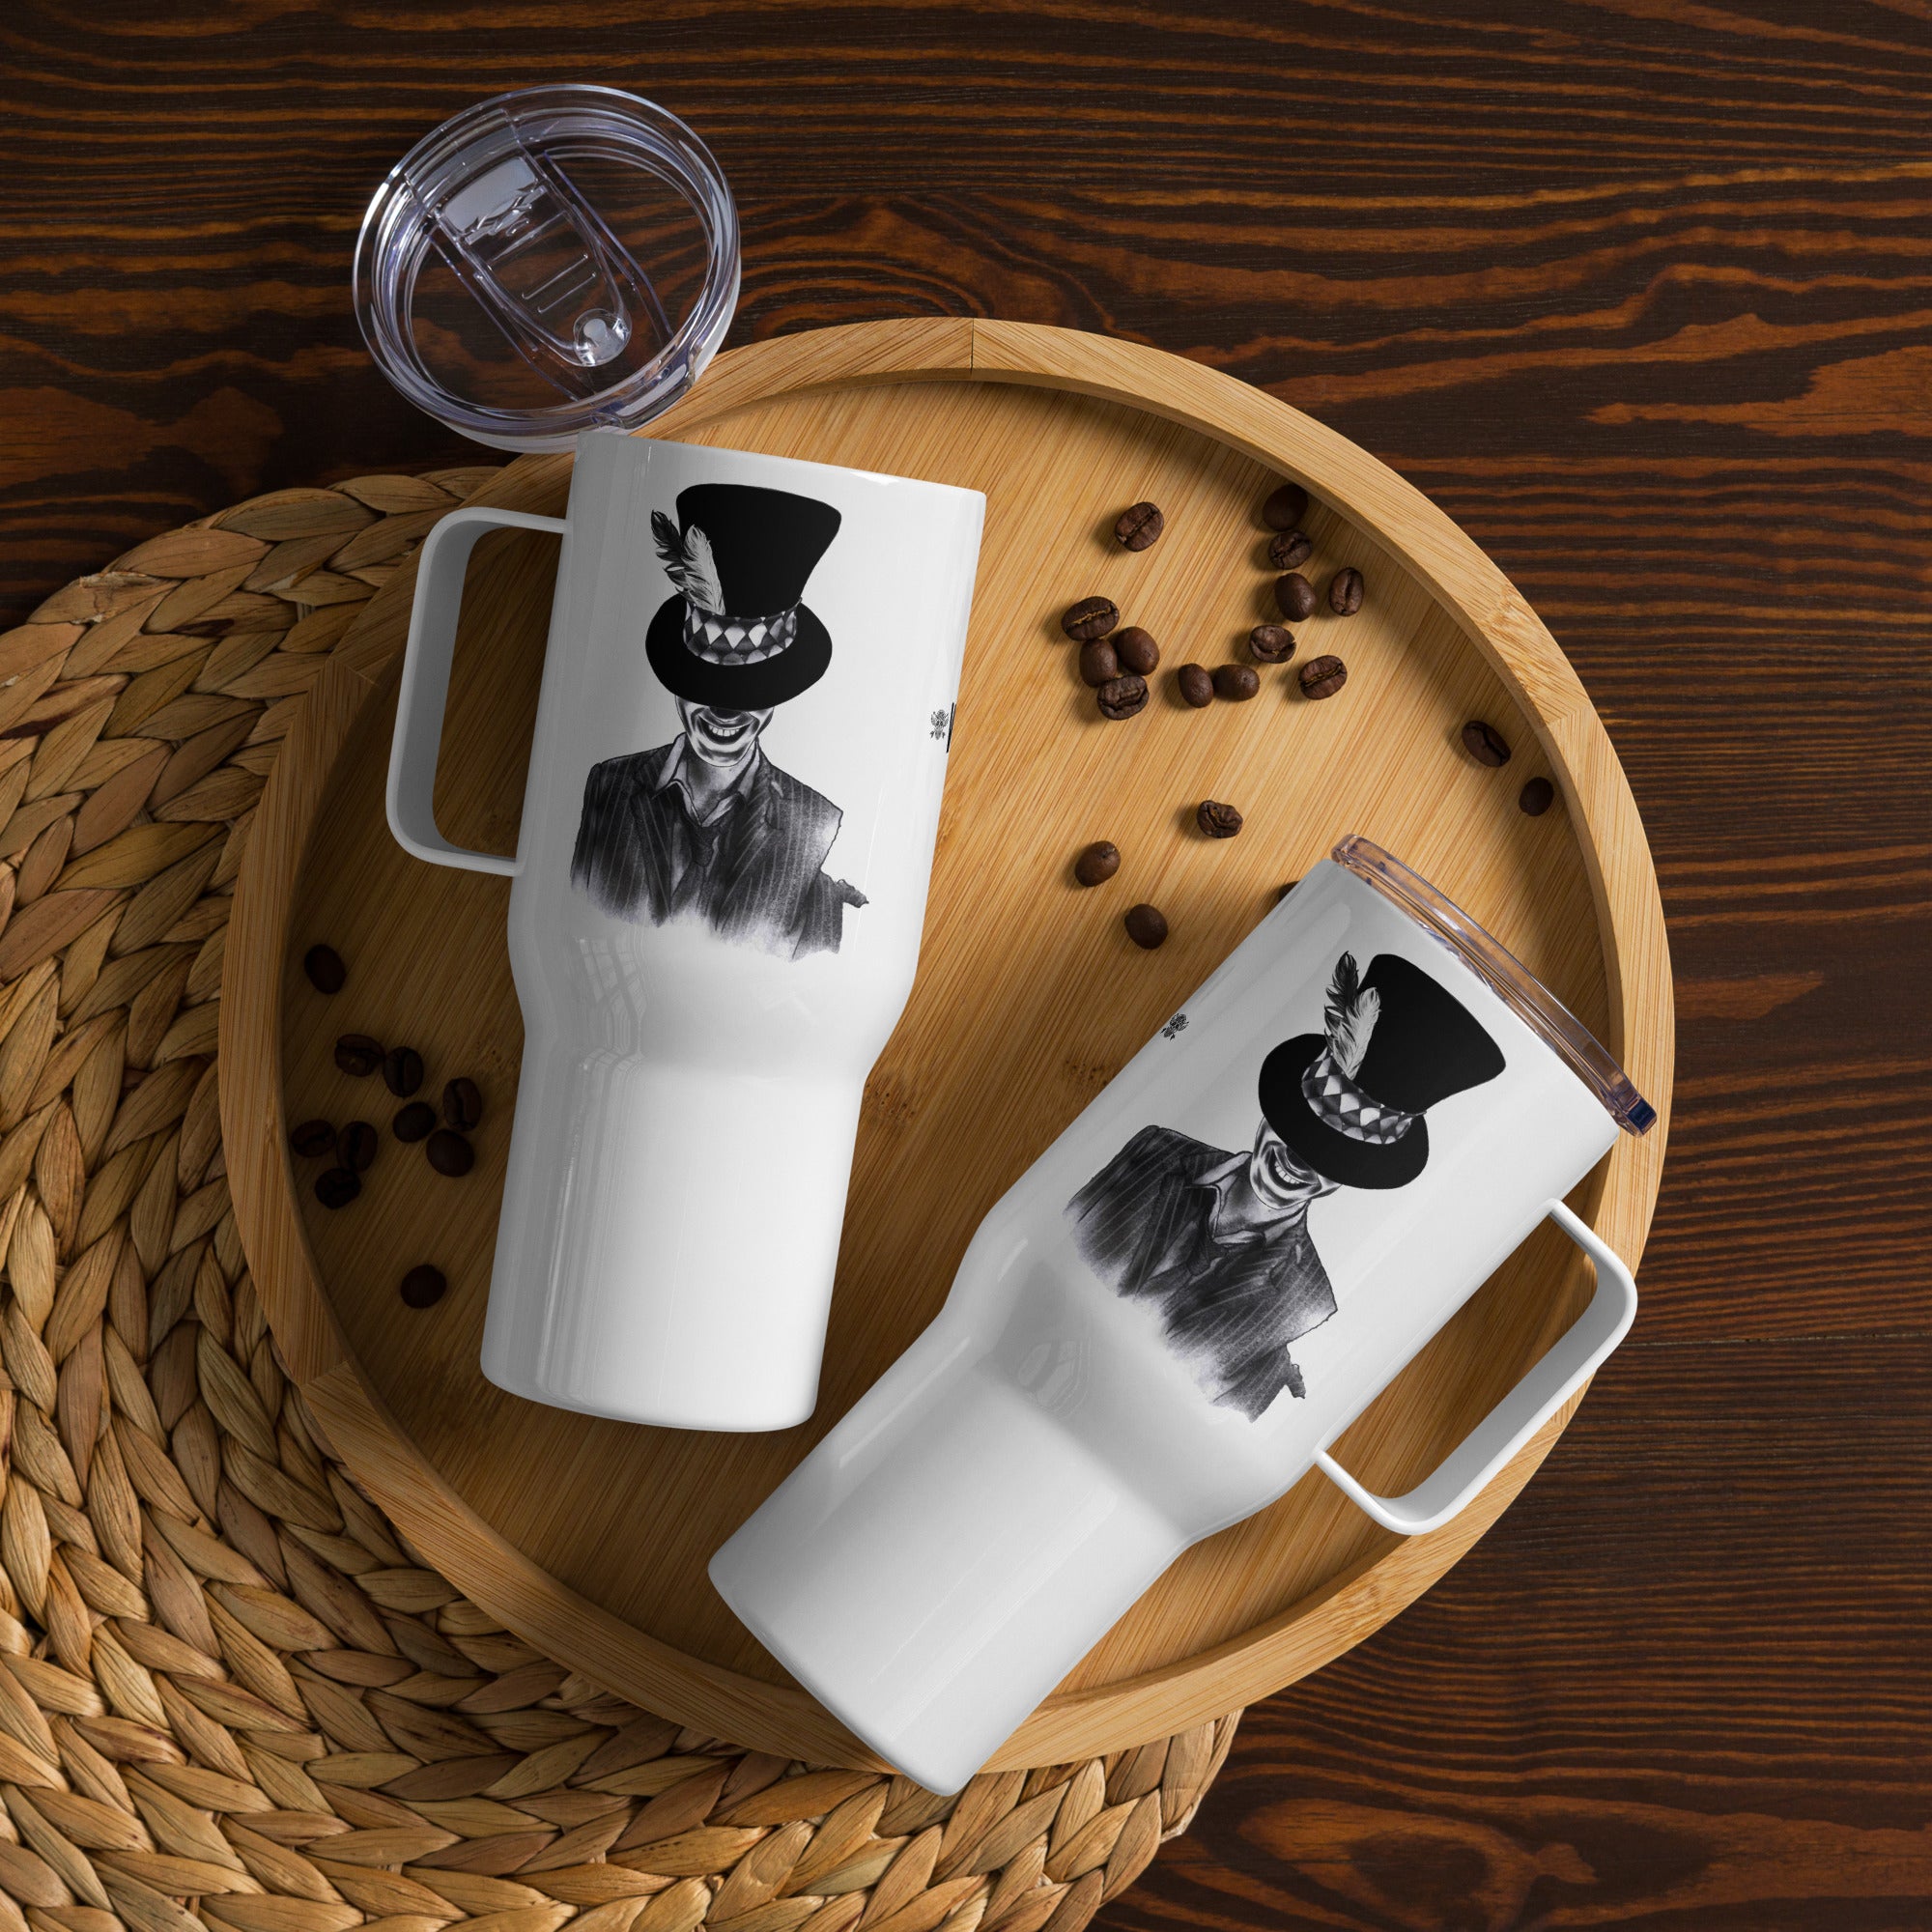 Voodoo Spirit Grinning travel mug with a handle